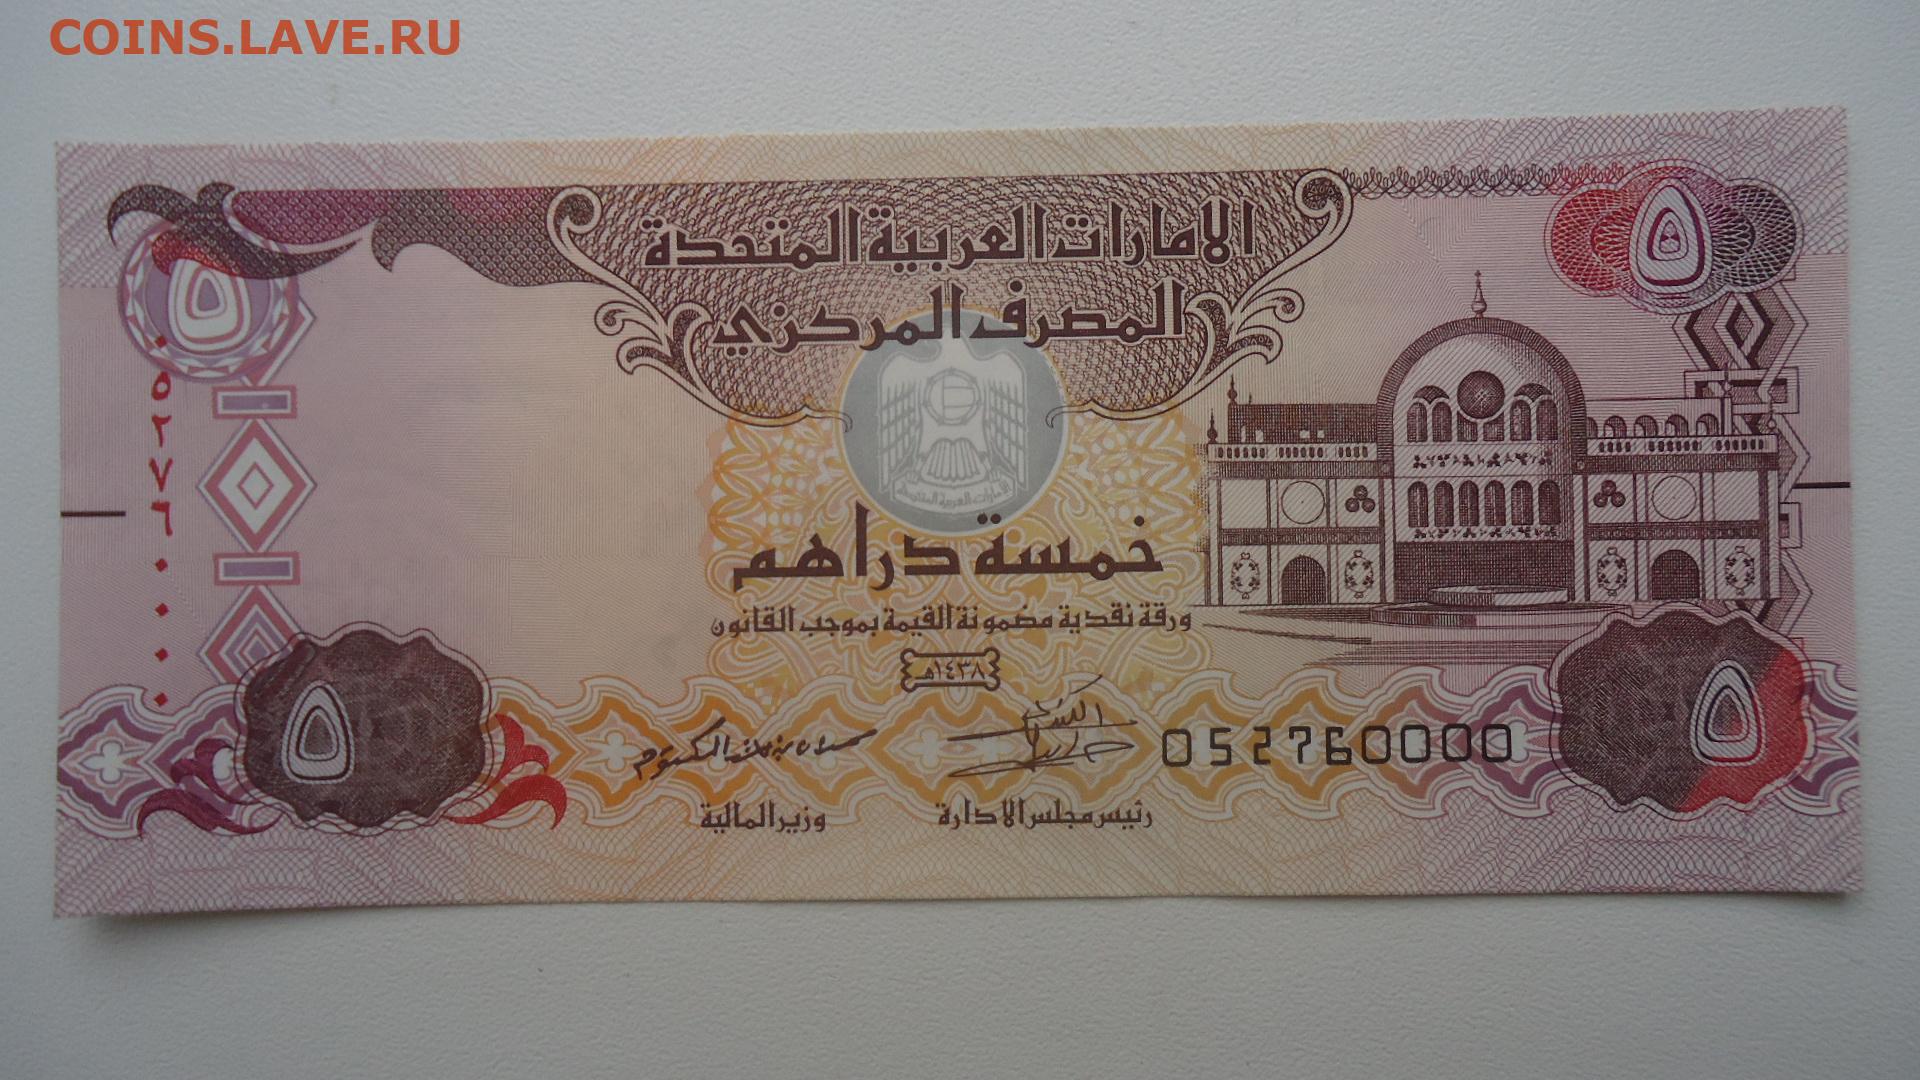 11 дирхам. 5 Дирхам ОАЭ. Банкнота ОАЭ 10 дирхам. 25 Дирхам Объединенные арабские эмираты. Дирхам ОАЭ К доллару США.